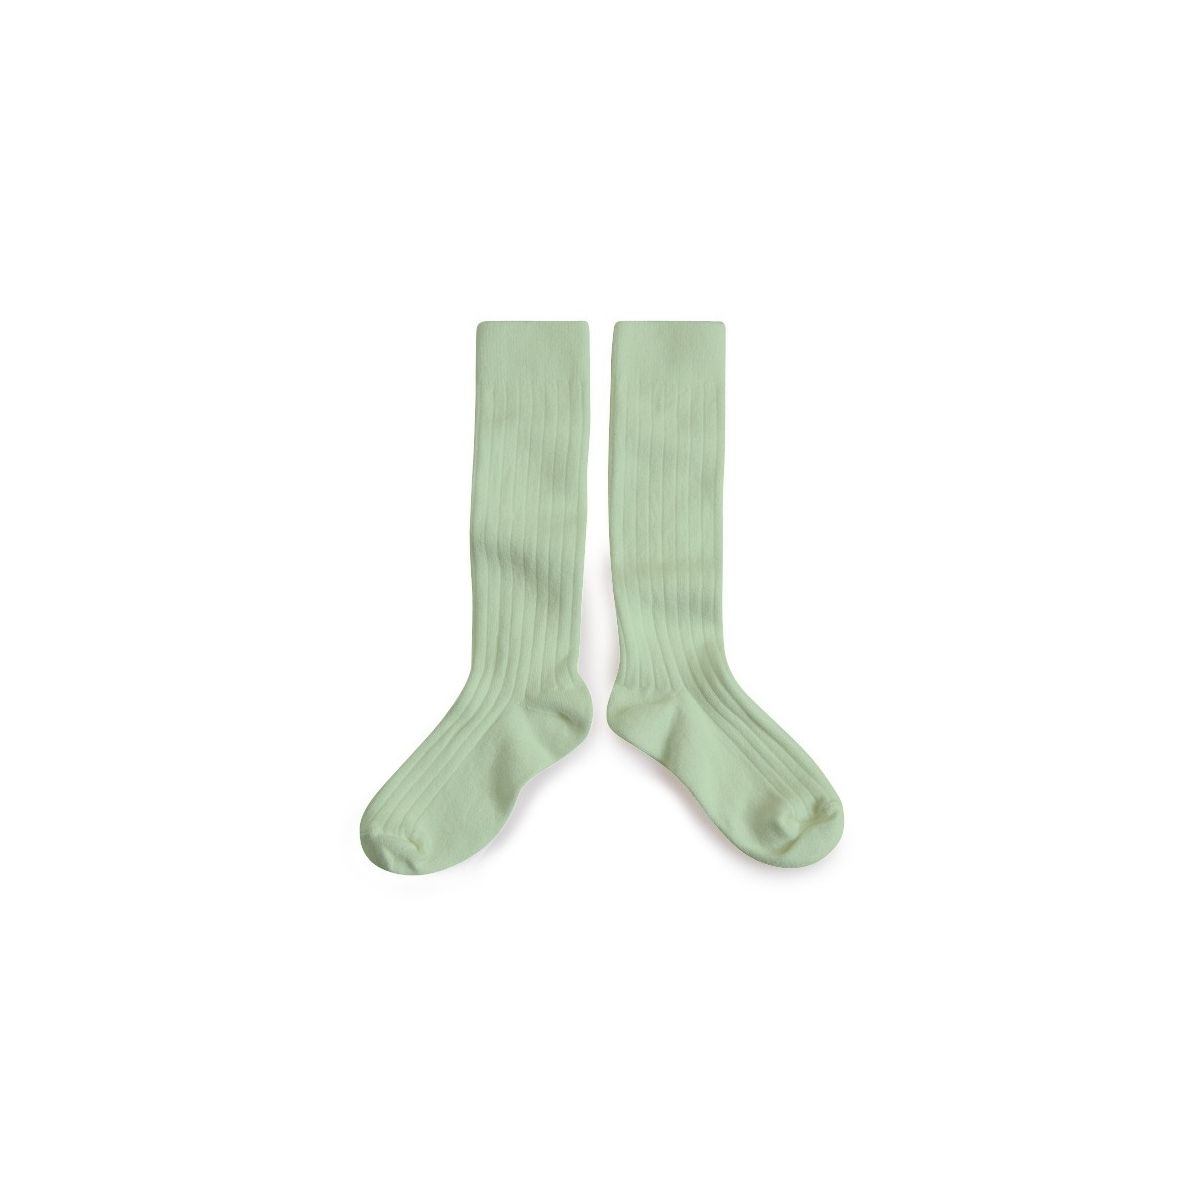 Collégien Knee high socks La Haute vert tilleul 2950 589 La